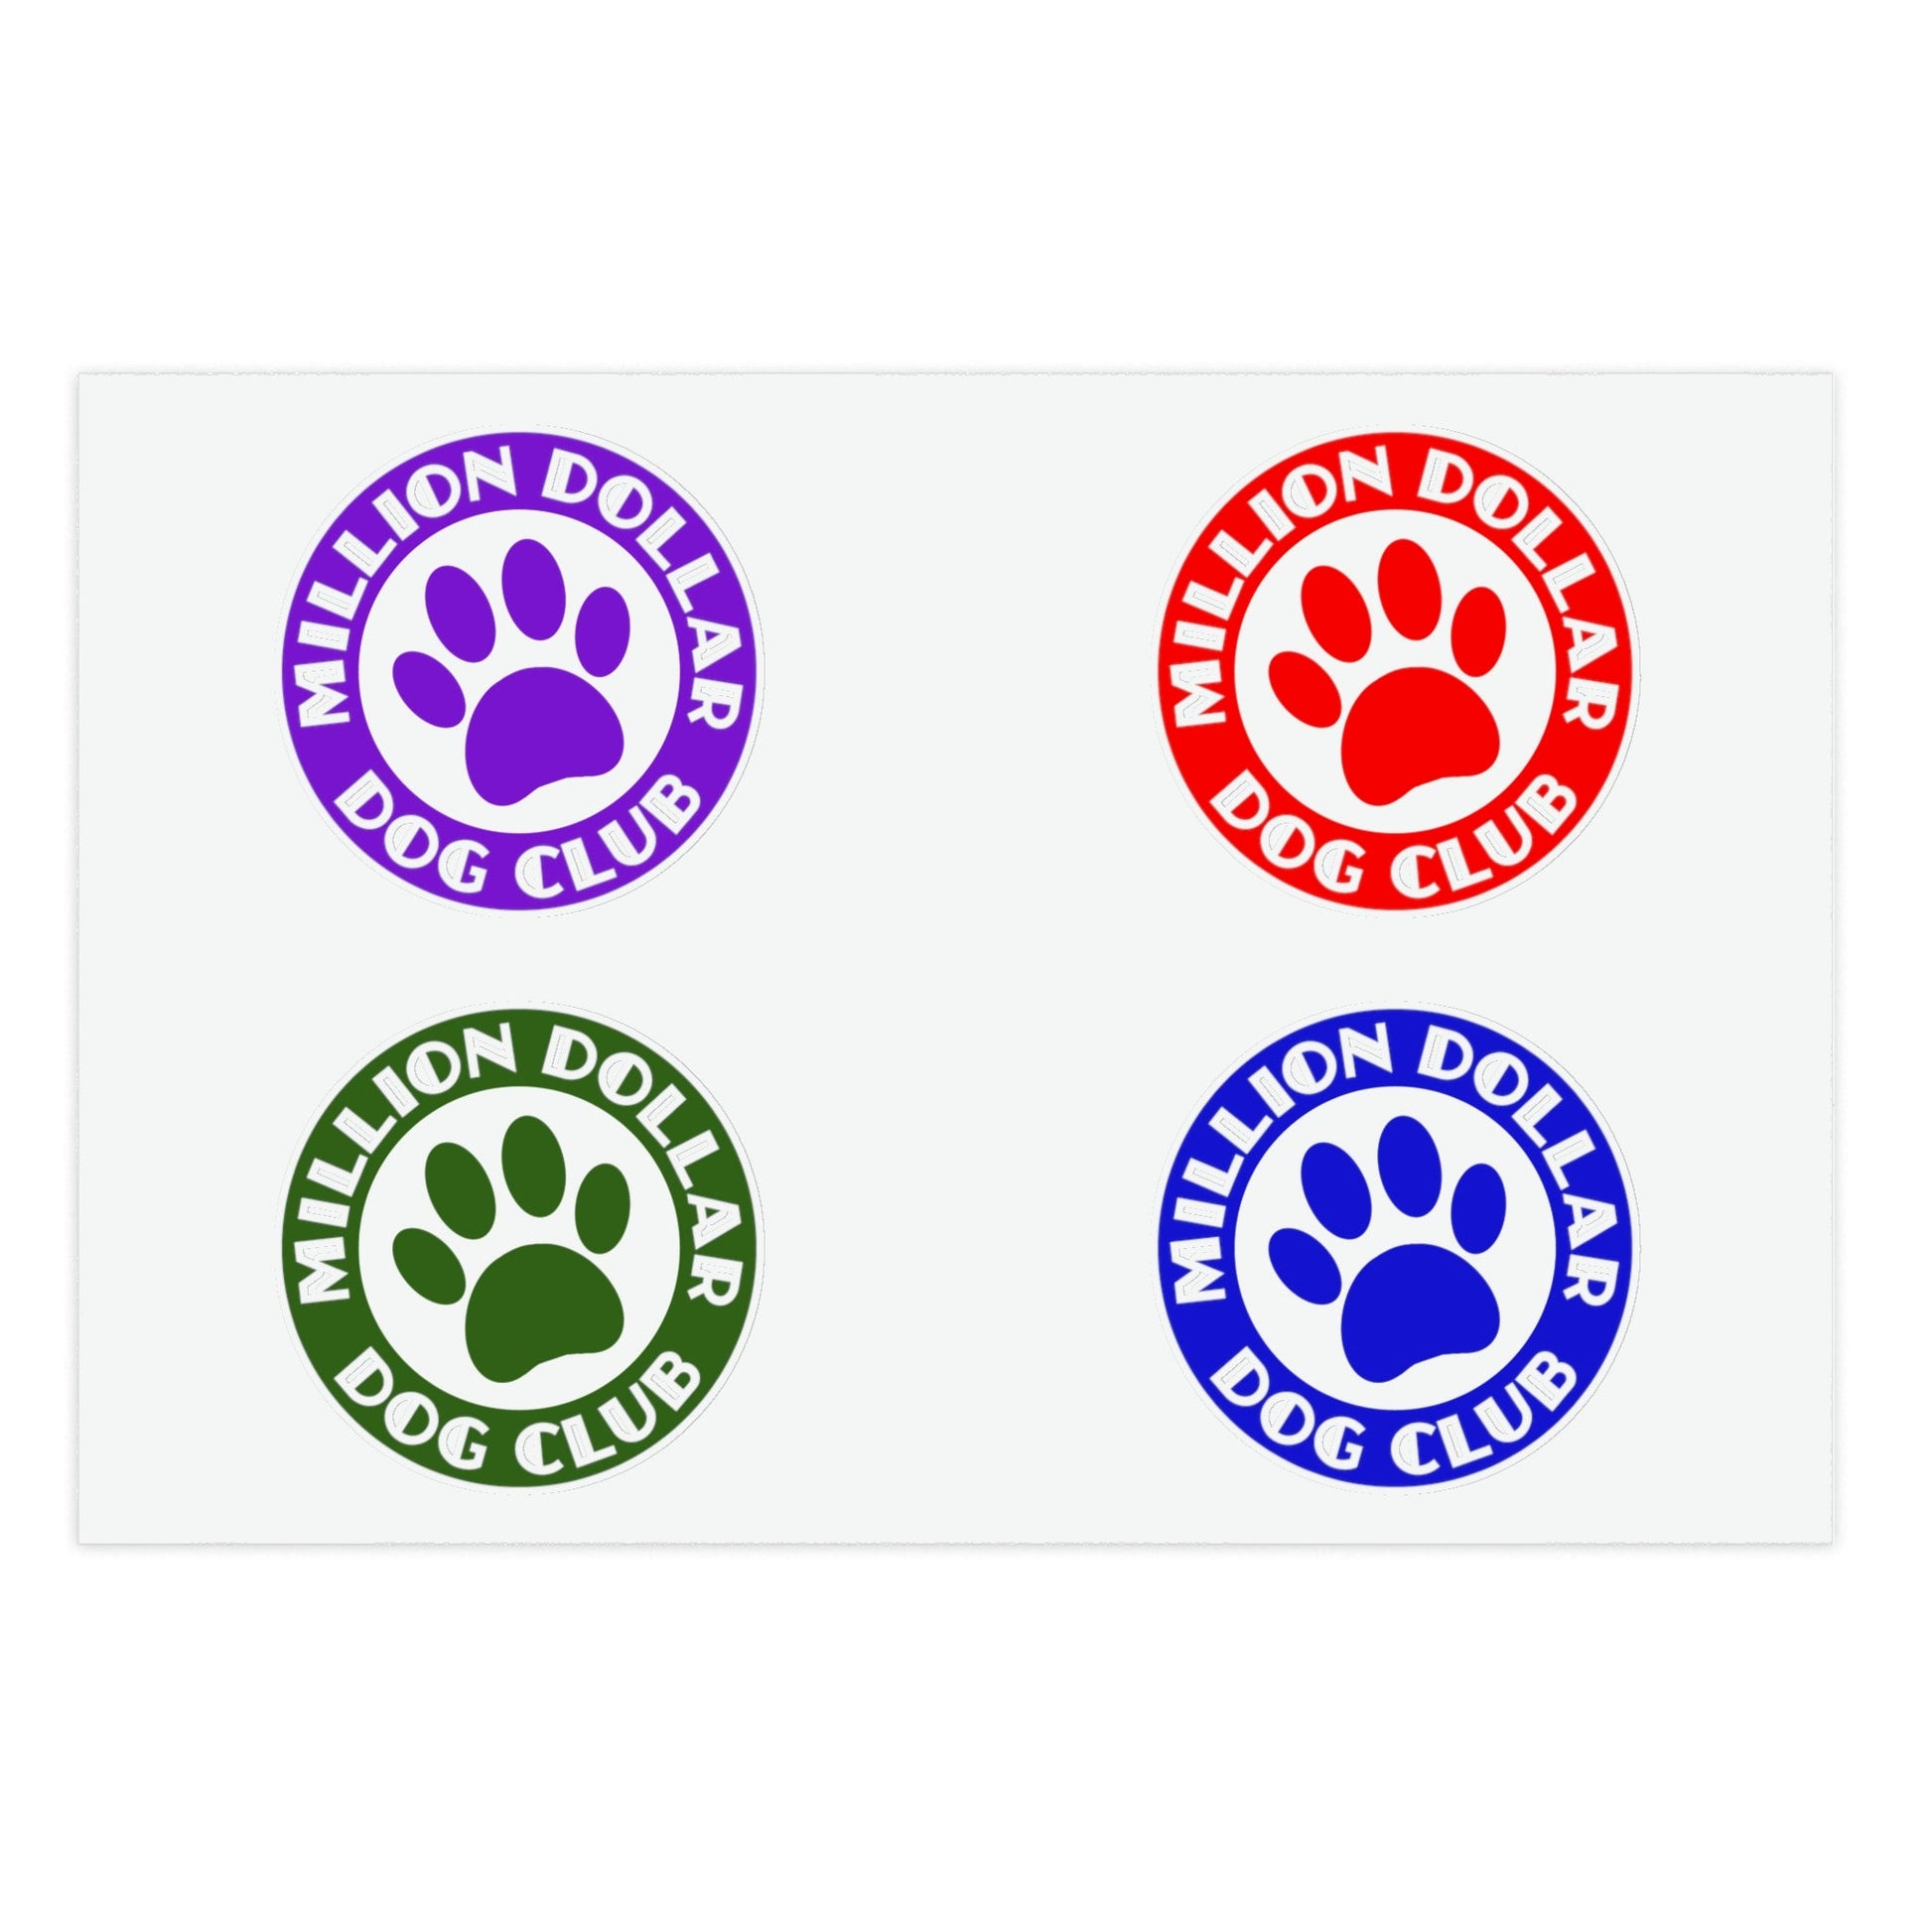 Million Dollar Dog Club | Sticker Sheet - Detezi Designs-45855578773775586455